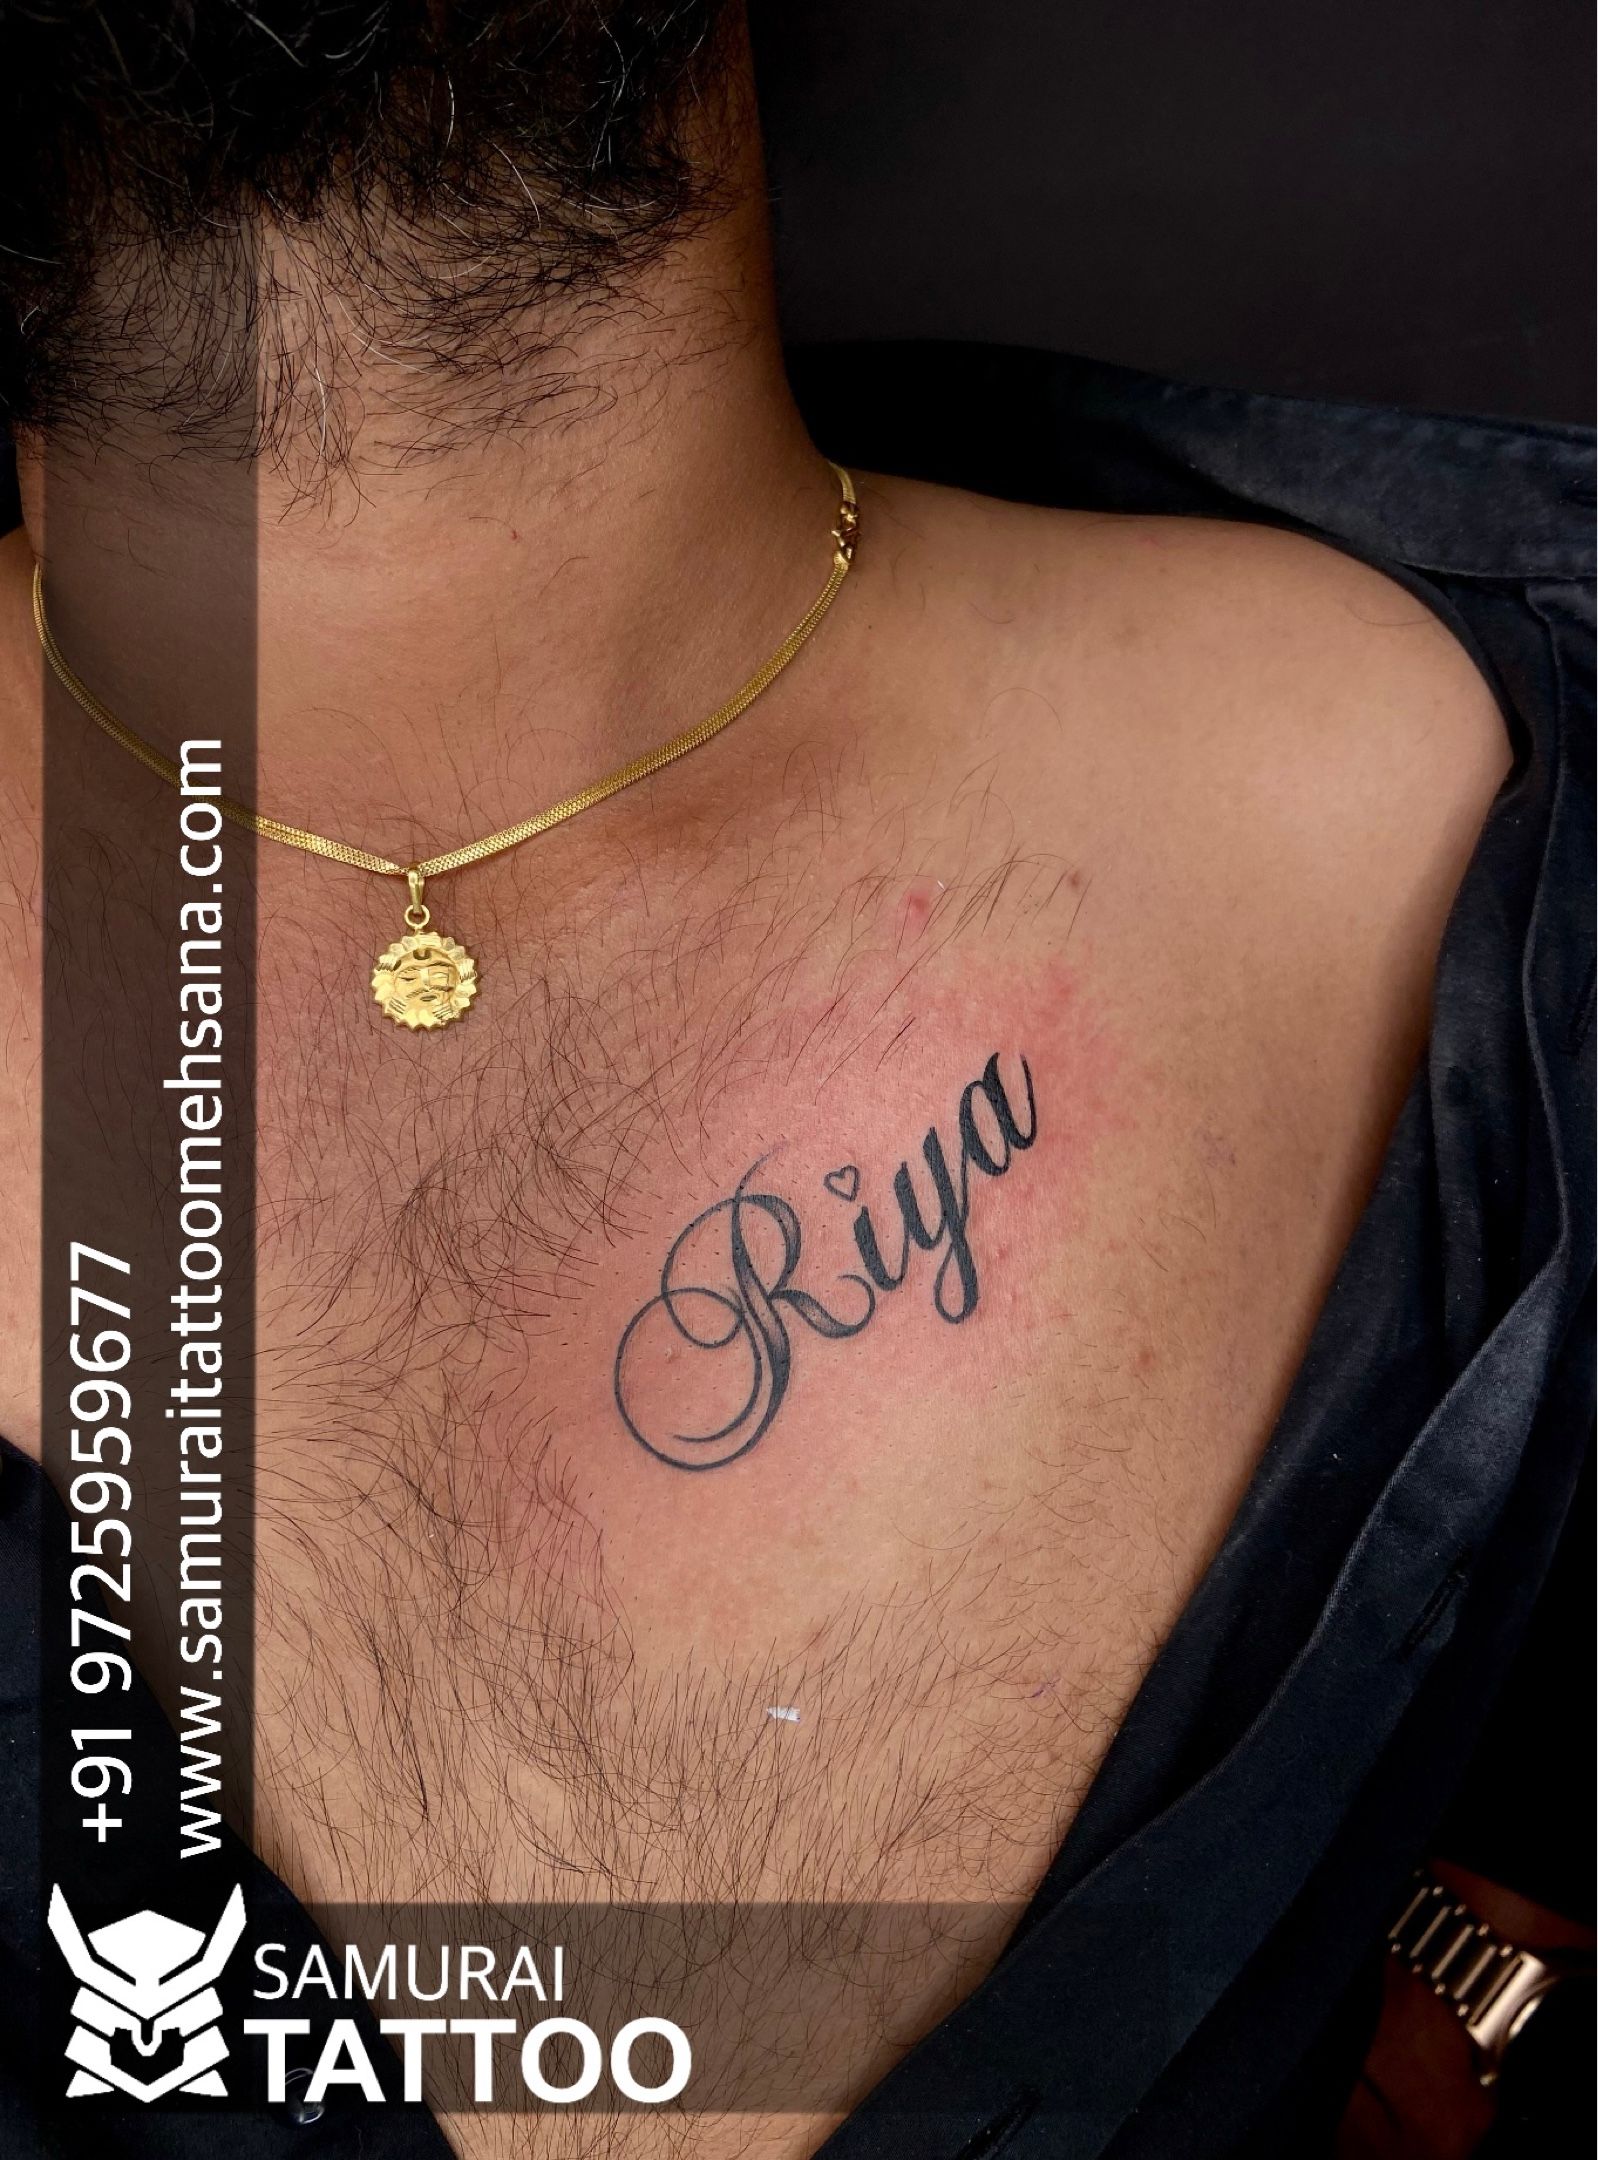 The client got a tattoo related to his life. #punjabmap #tattoos  #punjabifont #art #instagram #tattooart | Instagram